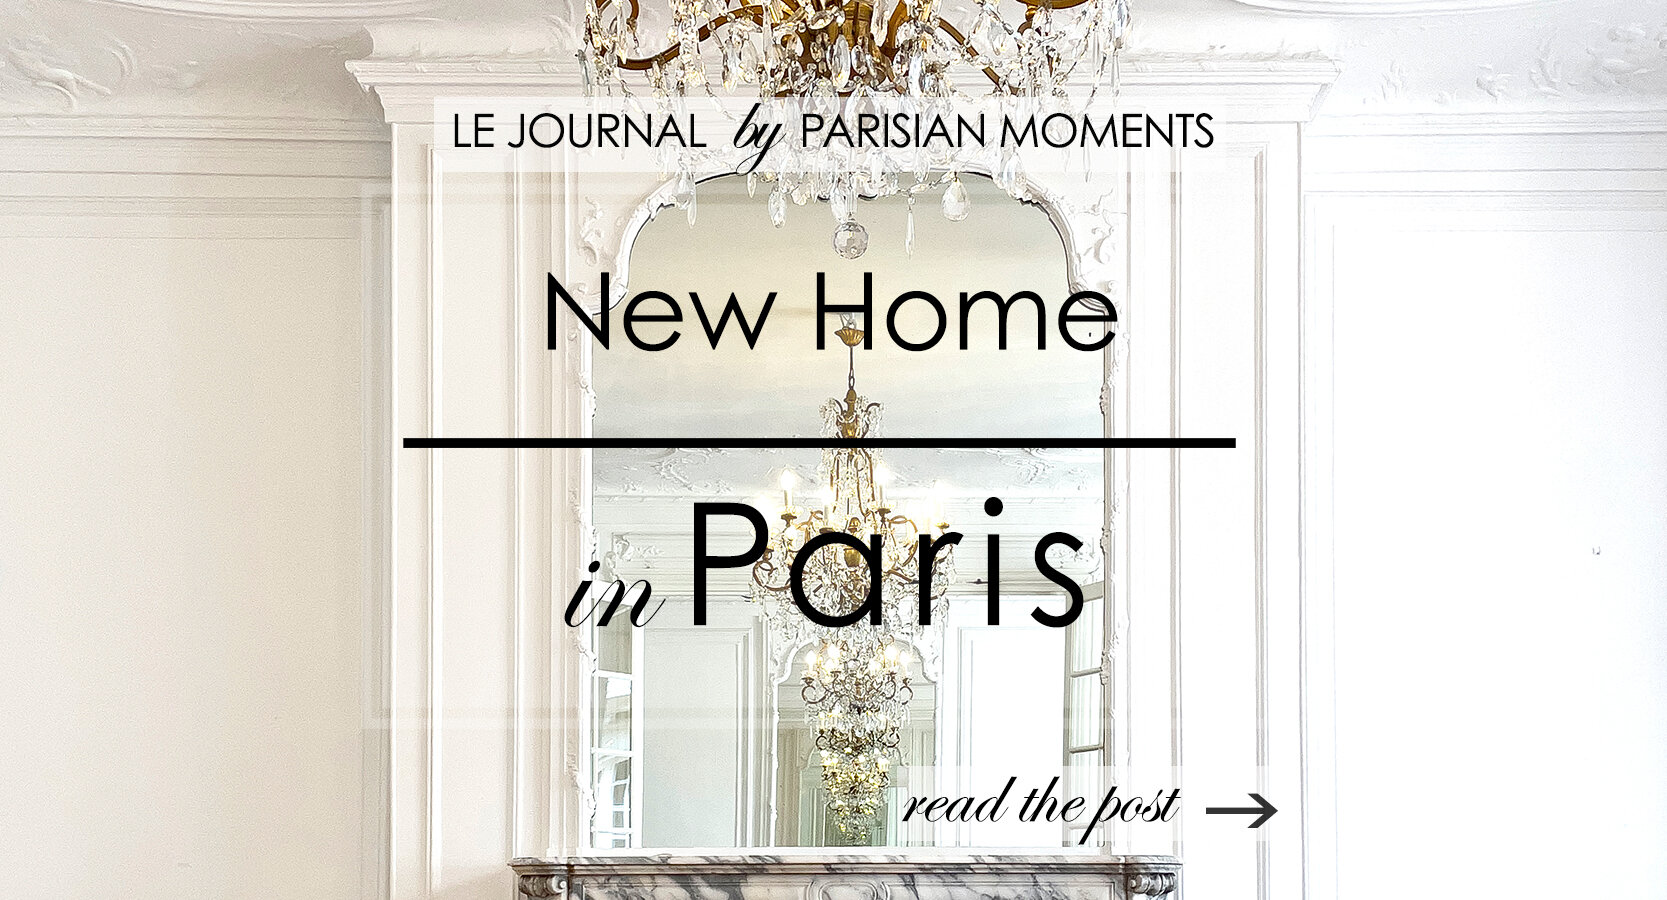 Parisian Moments has a New Home in Paris